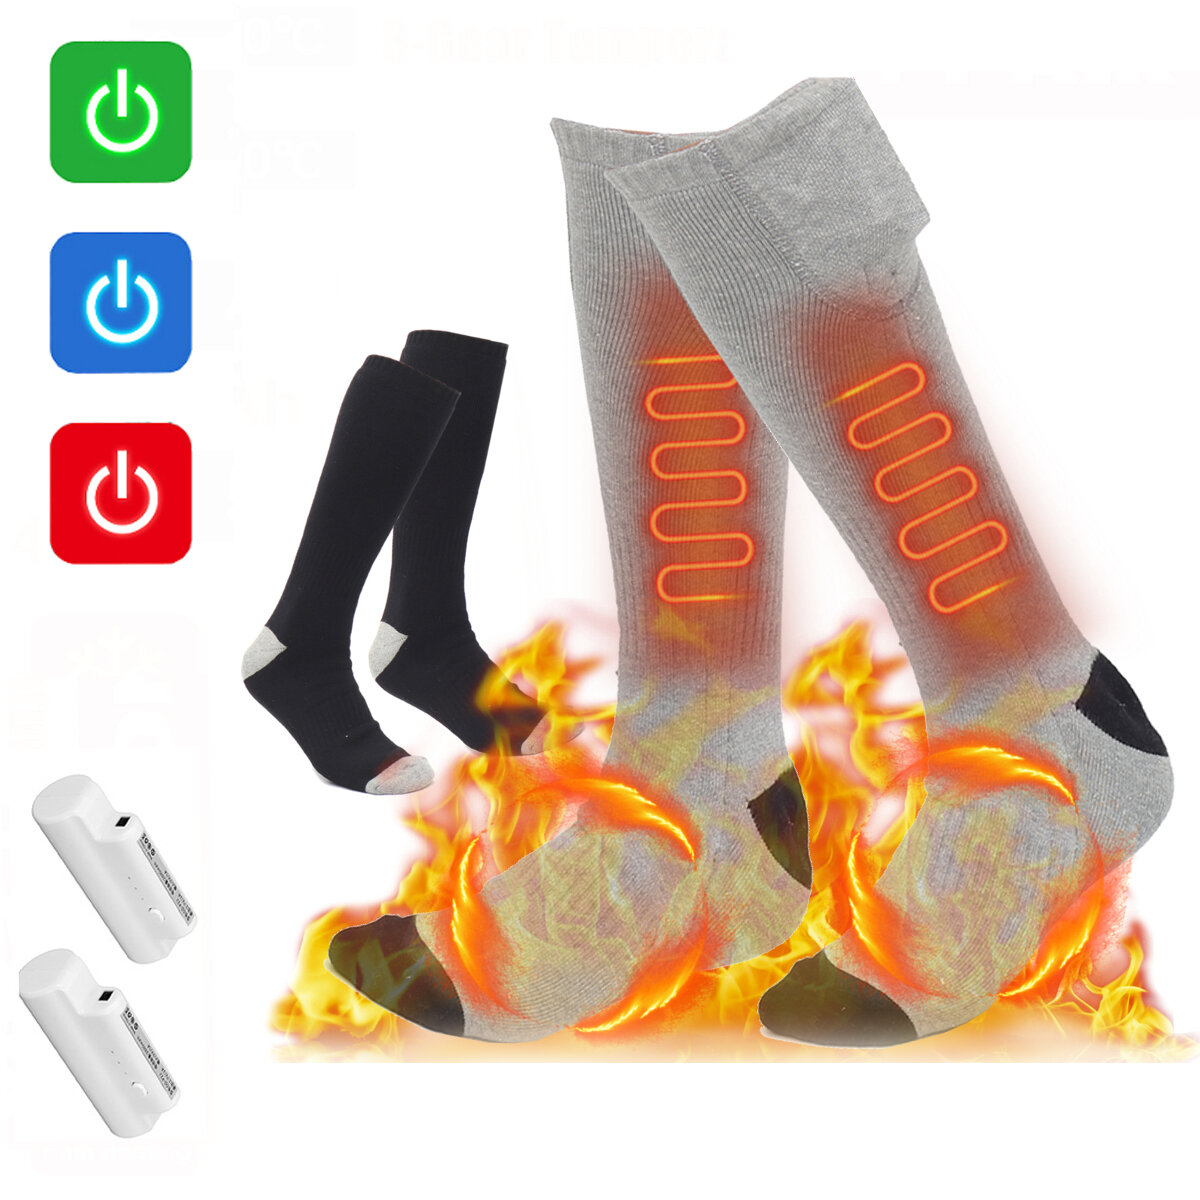 3-Gear Adjustable 4000mAh Electric Heating Socks 70℃ Intelligent Heating Warm Up Breathable Comfortable Long Socks - Grey